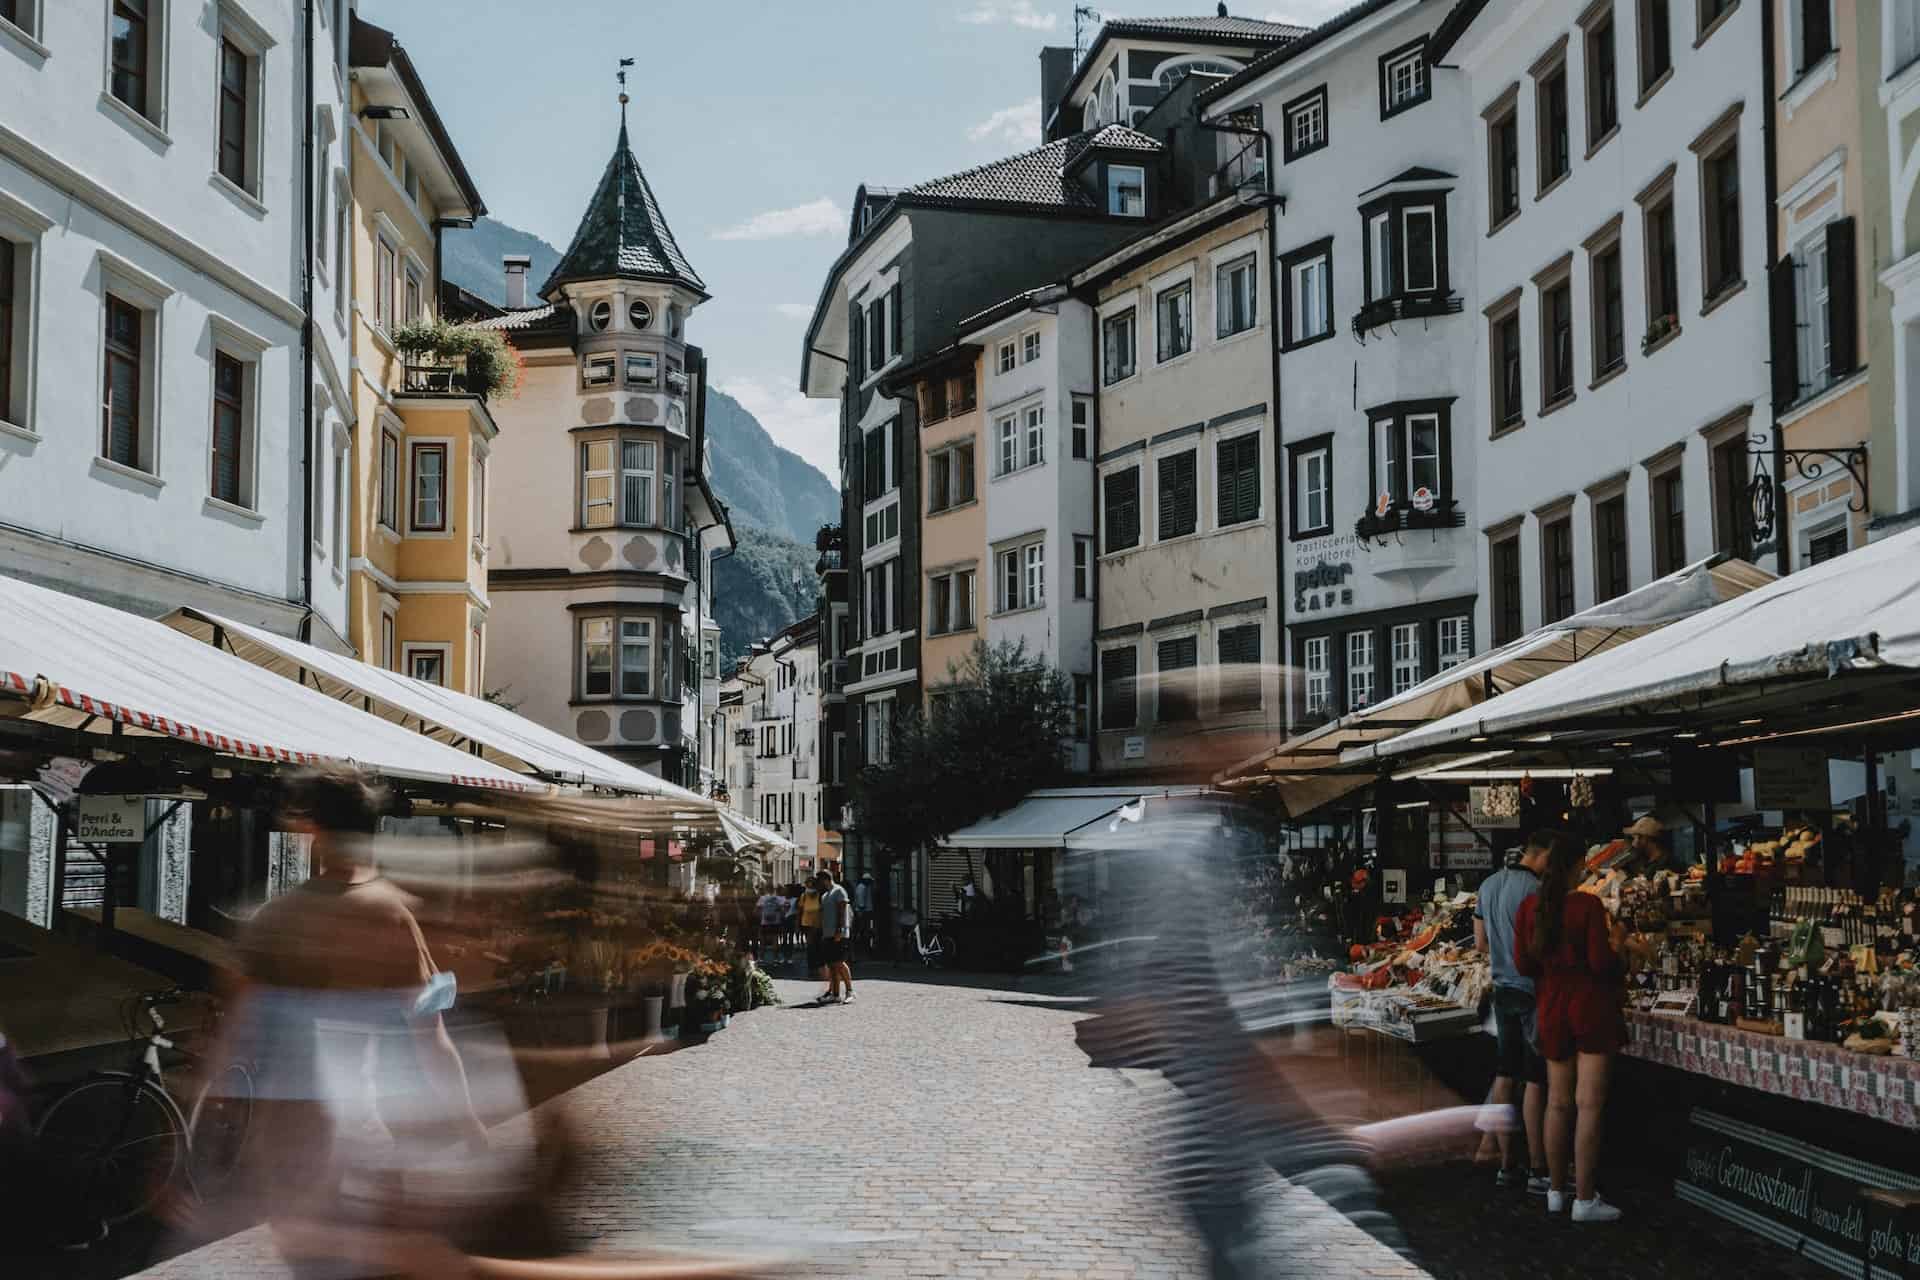 Best things to do in Bolzano Italy - Kecia Welt - Local streets in Bolzano by Fabrizio Coco on Unsplash